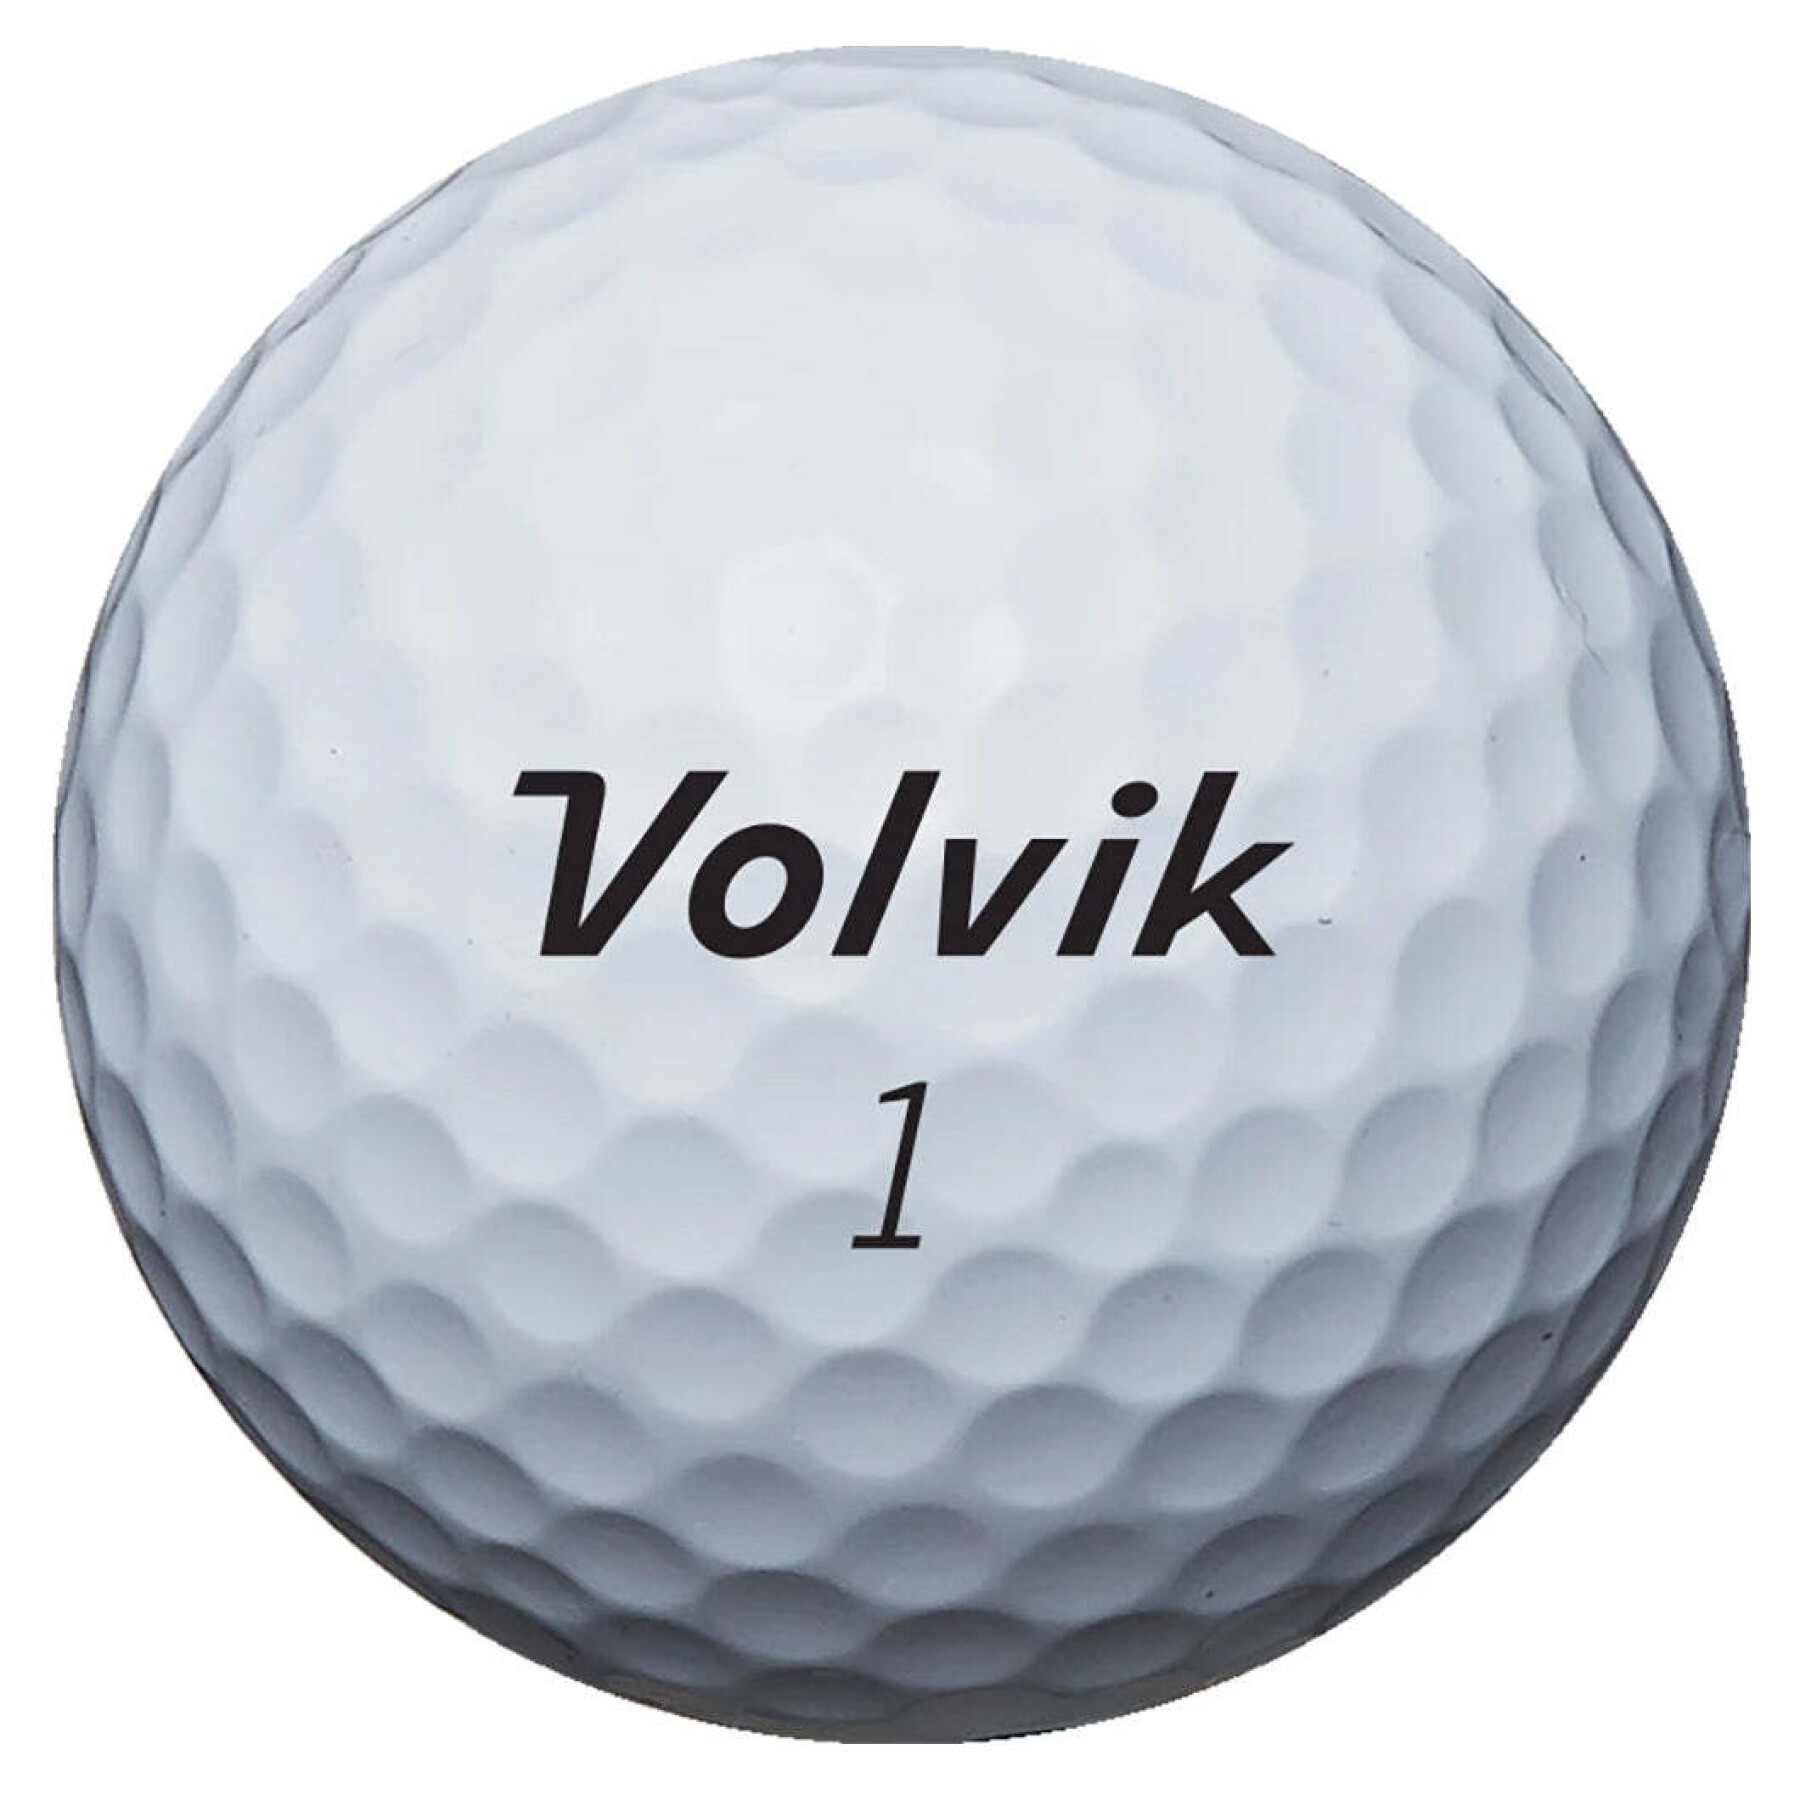 Pack of 12 3-piece golf balls Volvik XT Soft Urethane